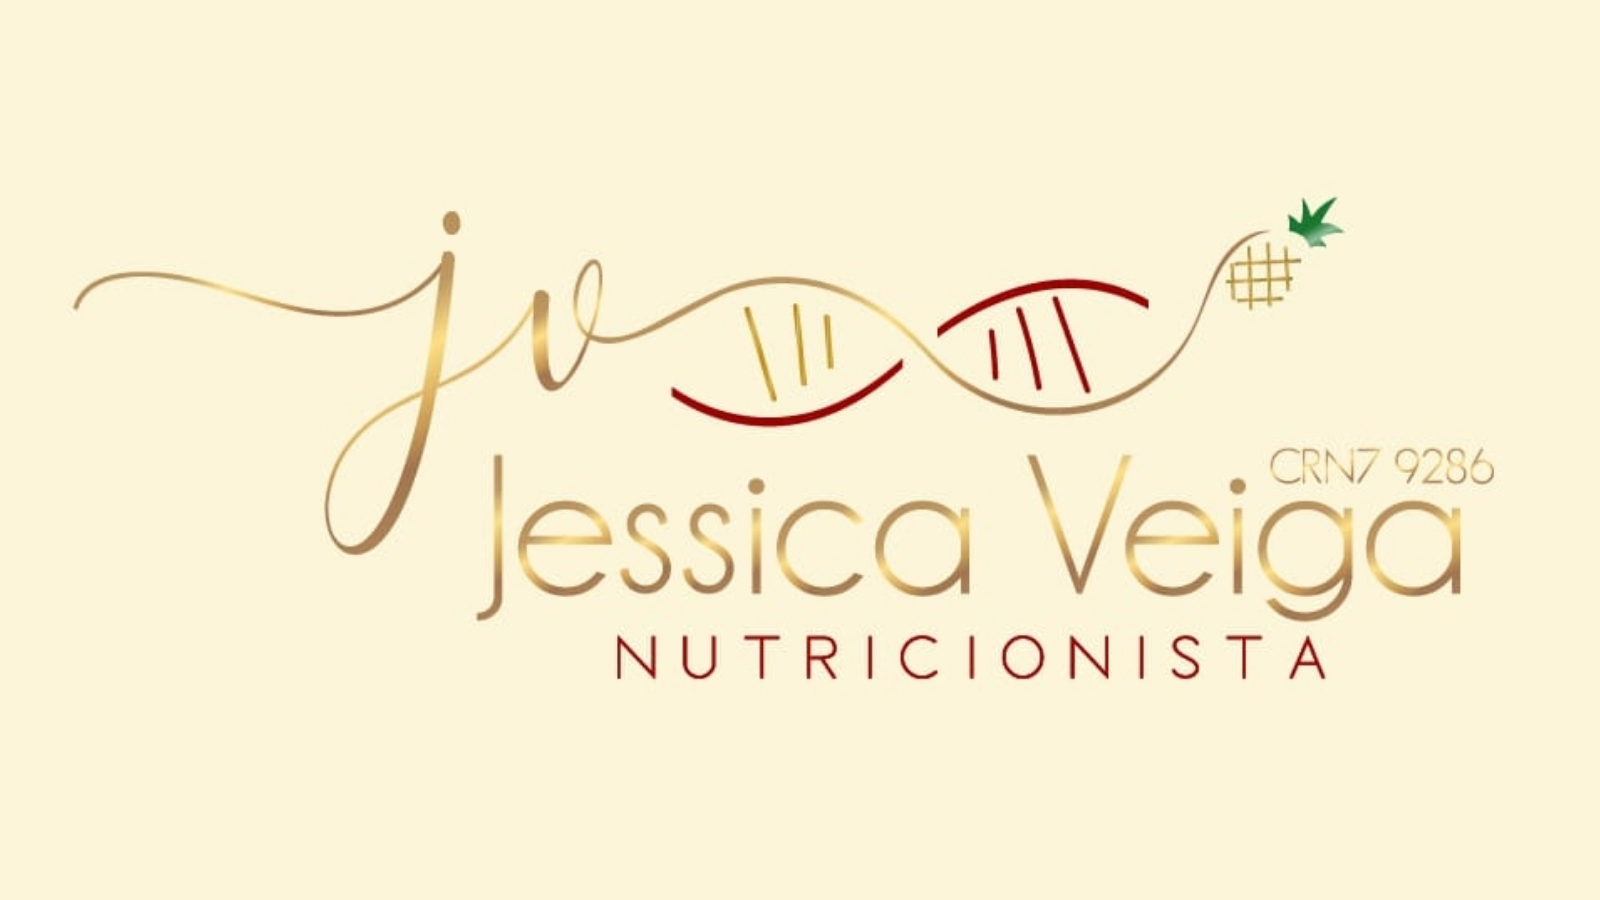 Nutricionista Jessica Veiga